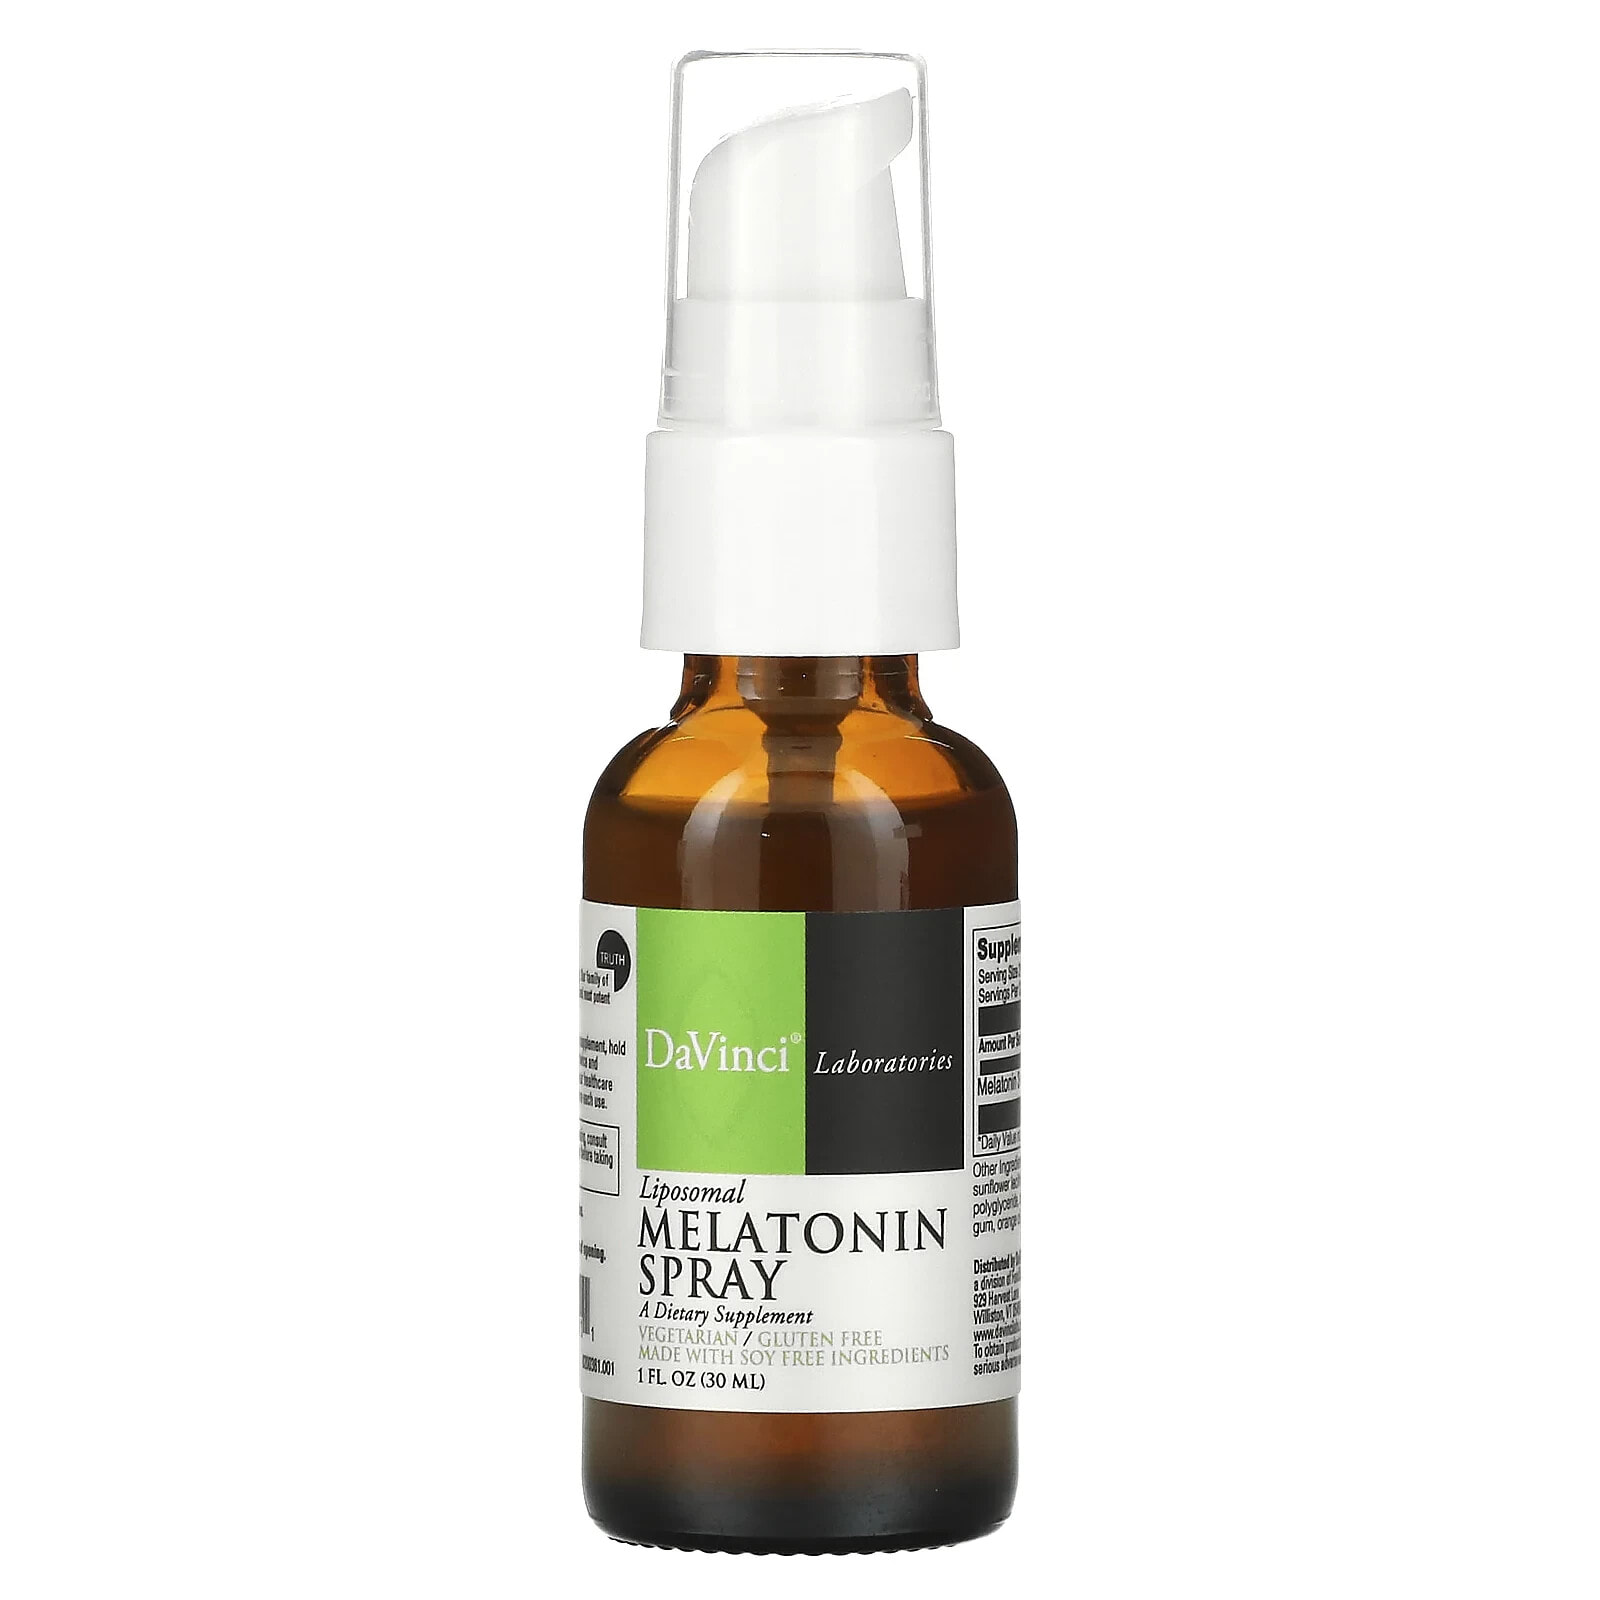 Liposomal Melatonin Spray, 1 fl oz (30 ml)